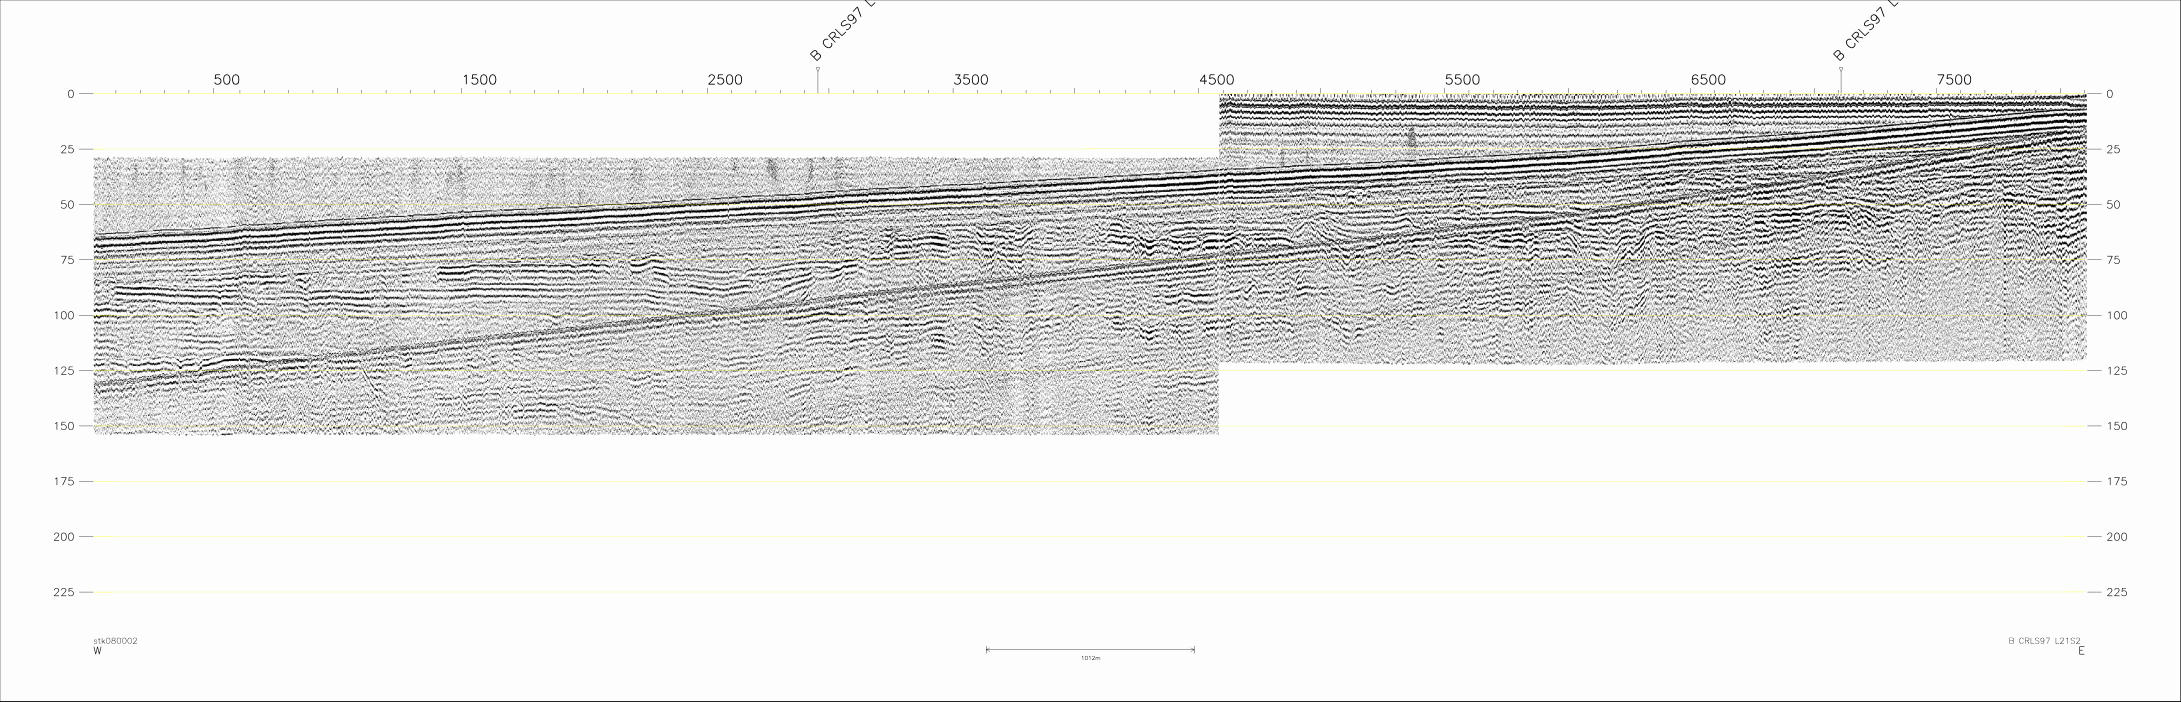 Seismic Reflection Profile Line No.: L21s2 (300523 bytes)